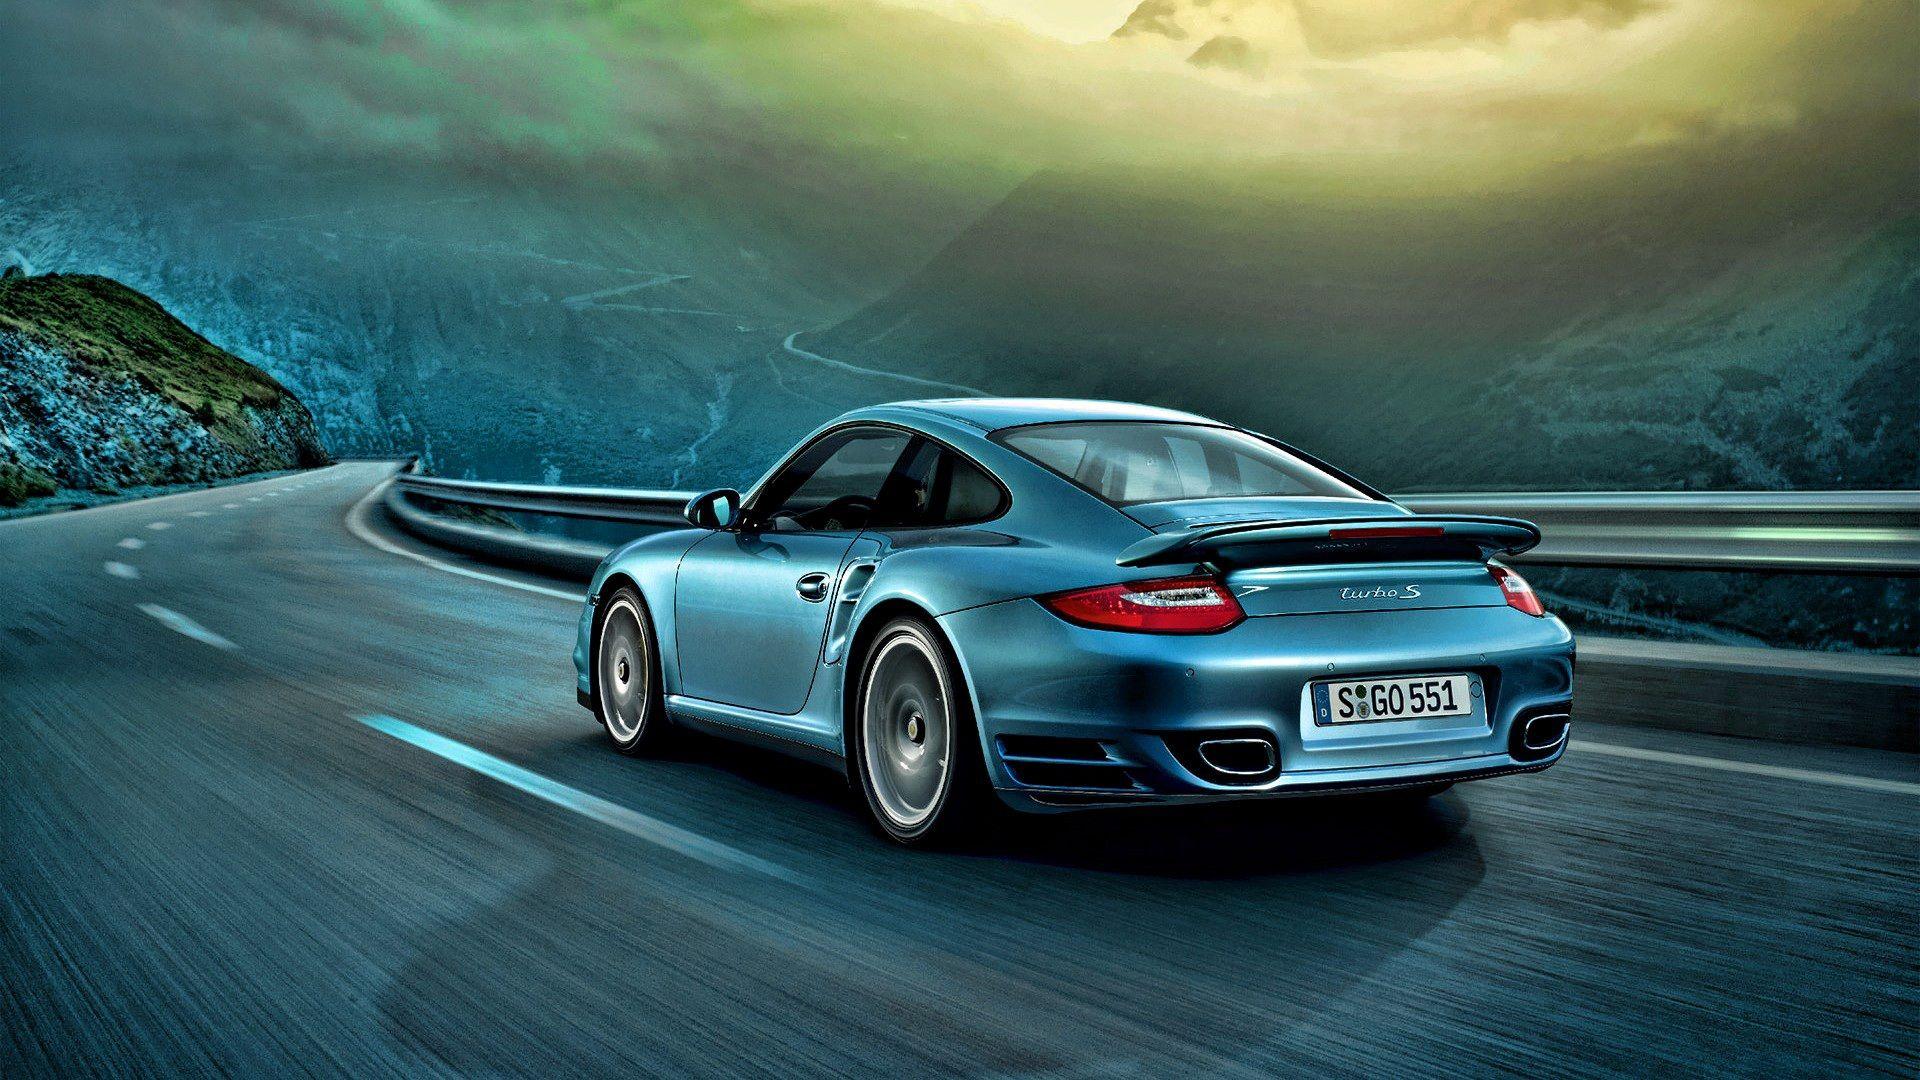 Porsche 911 Turbo HD Wallpaper, Background Image